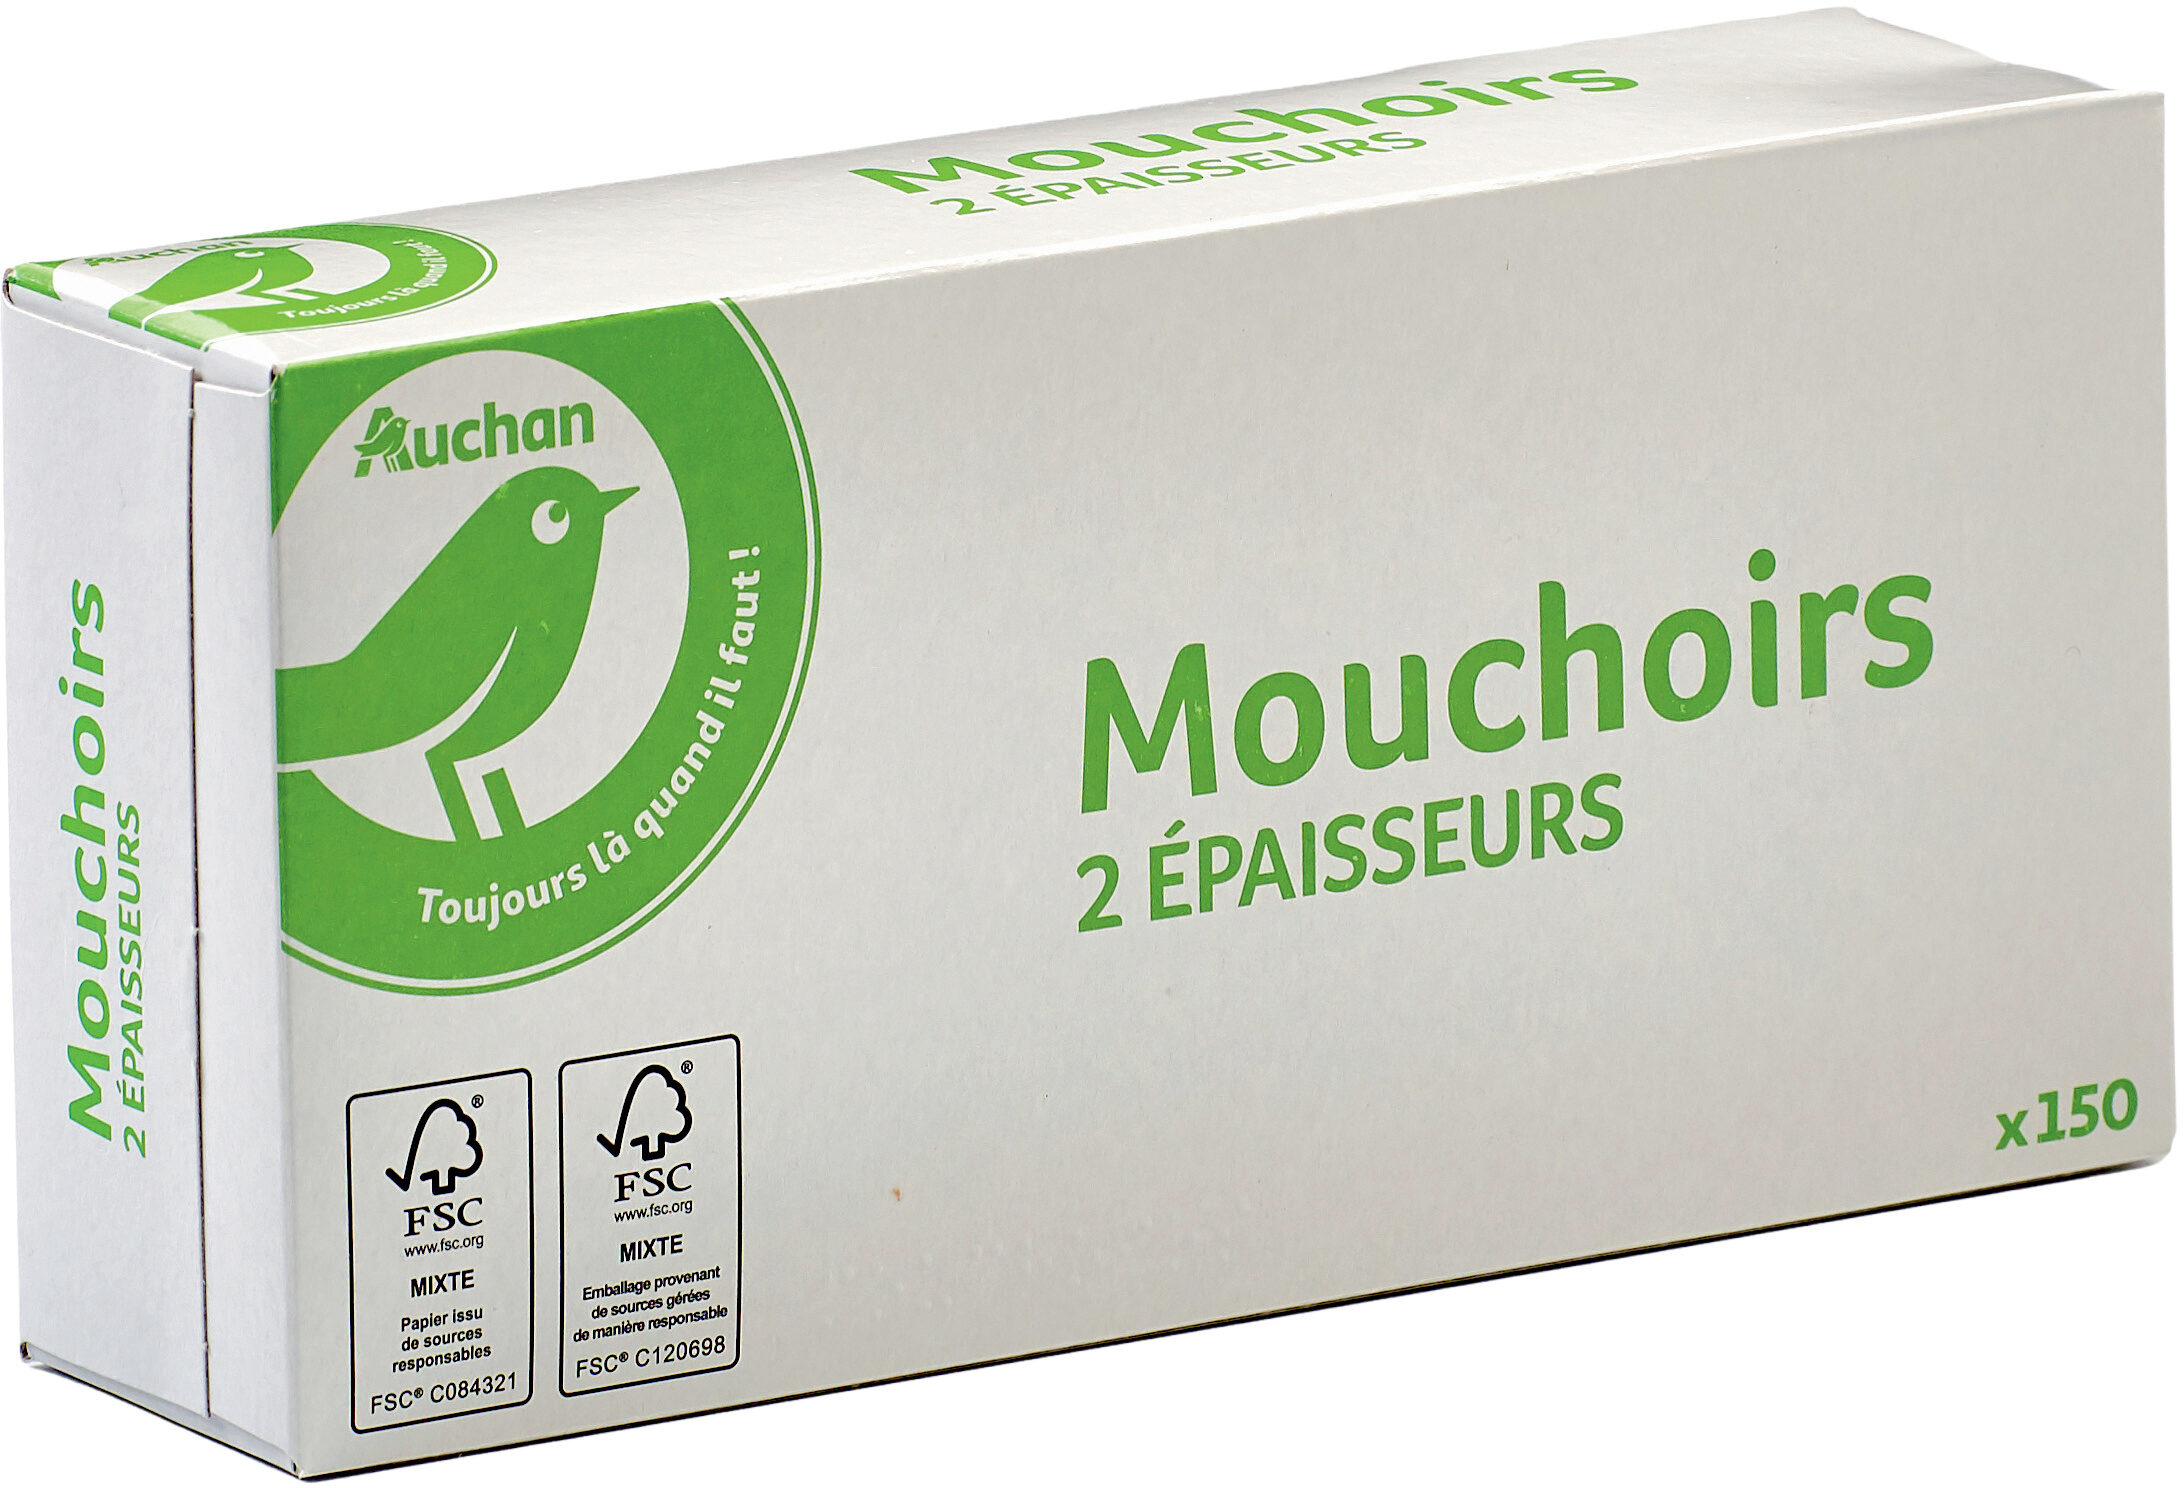 Auchan essentiel mouchoirs boite x150 - Produit - fr